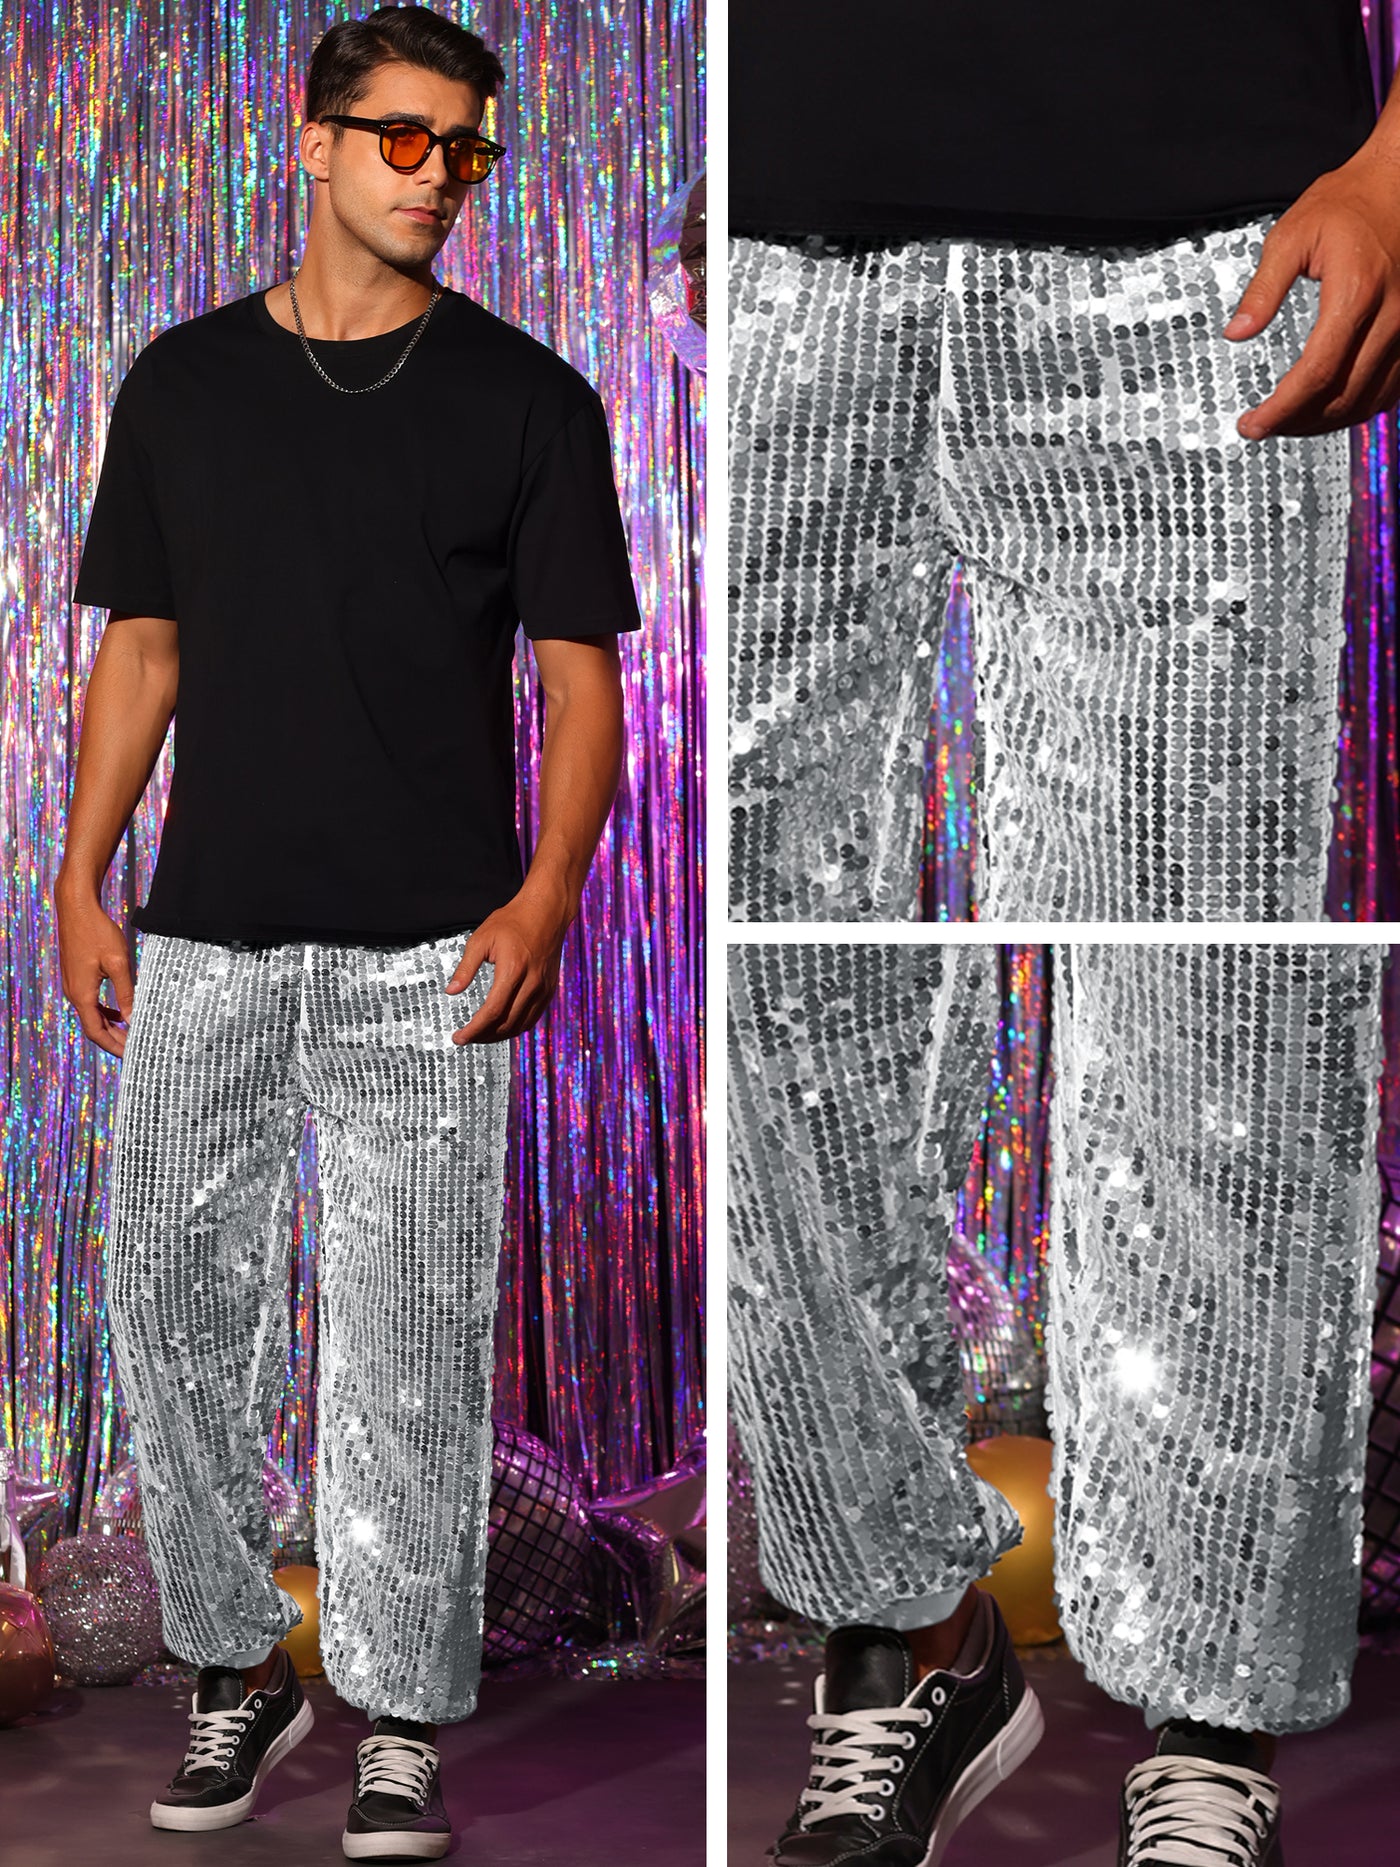 Bublédon Sequin Pants for Men's Sparkly Disco Costume Elastic Waist Shiny Metallic Joggers